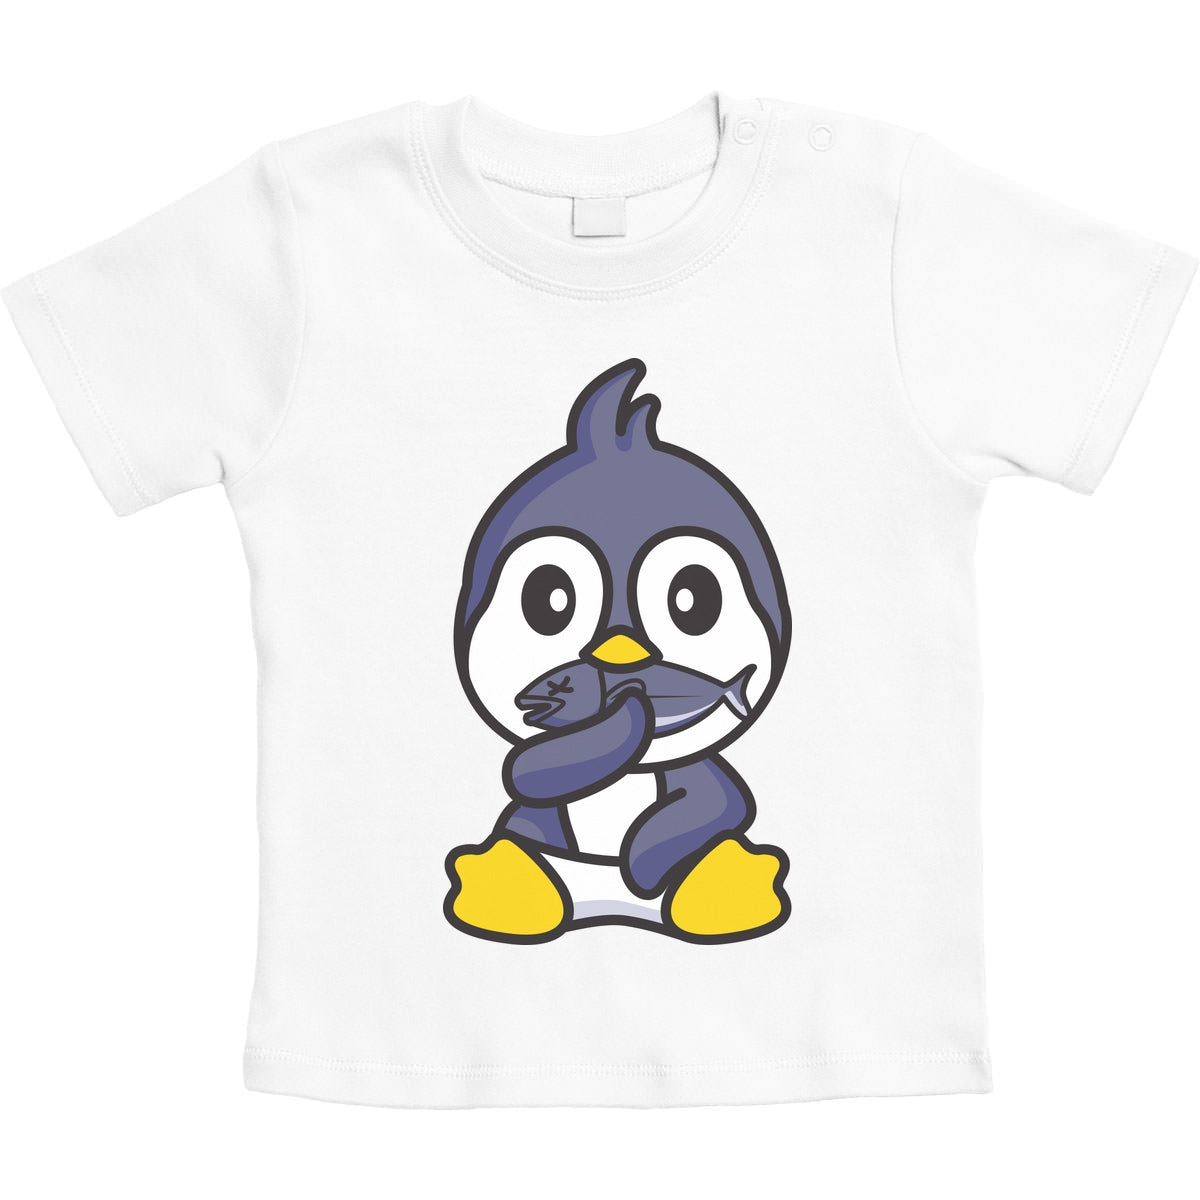 Baby TShirt Pinguin Baby Kleidung Neugeborene Unisex Baby T-Shirt Gr. 66-93